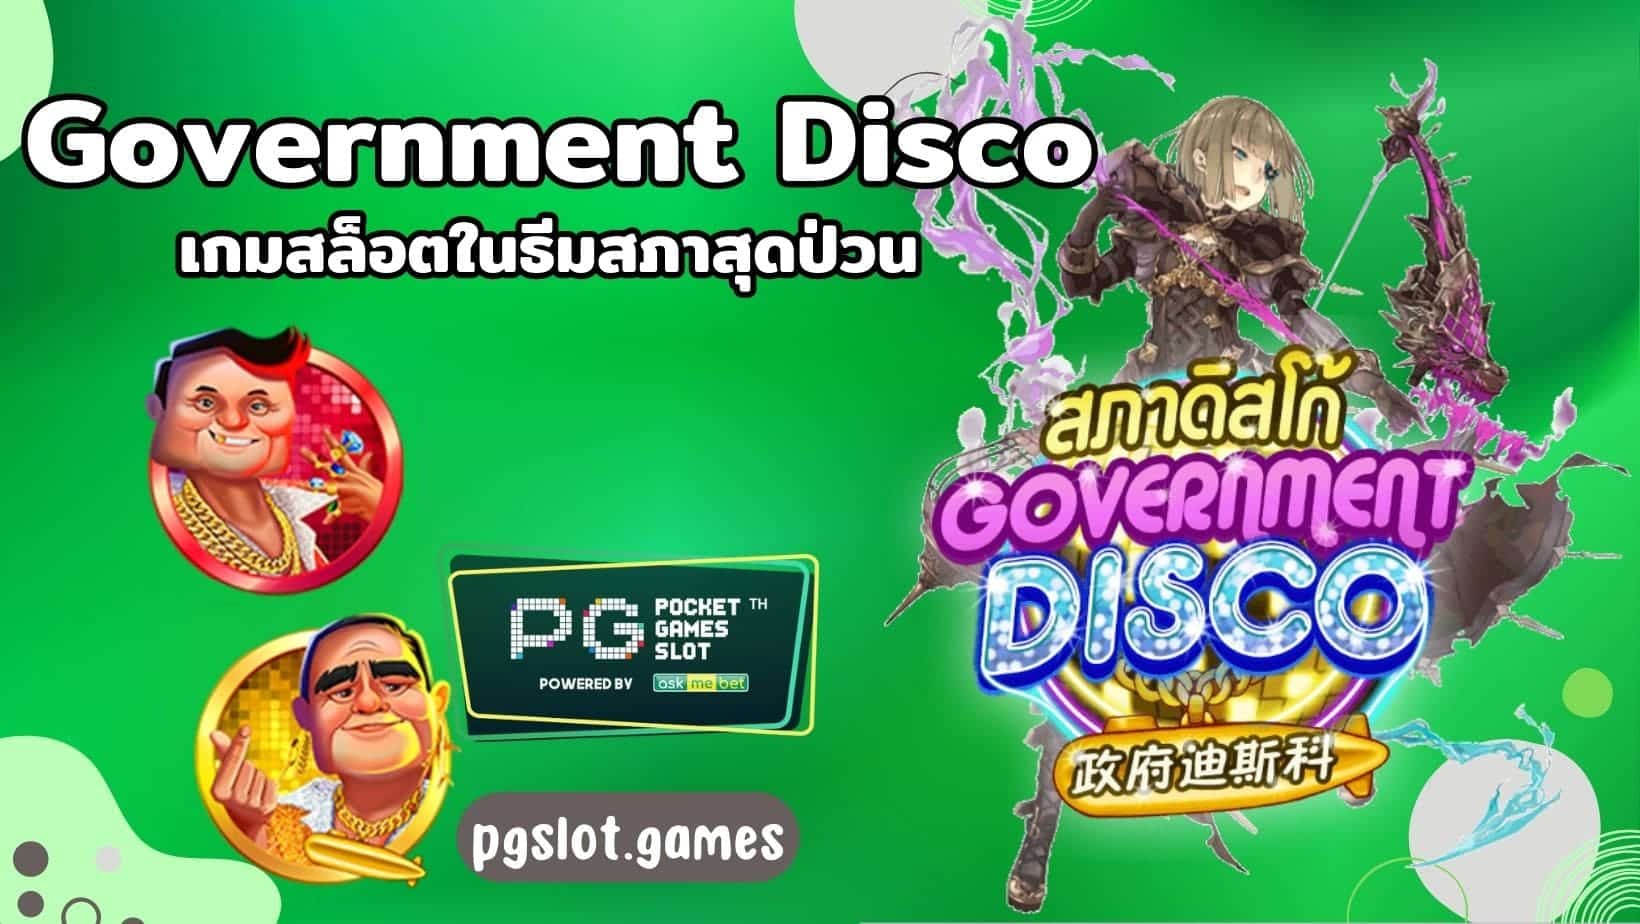 Government Disco เกมสล็อตในธีมสภาสุดป่วน